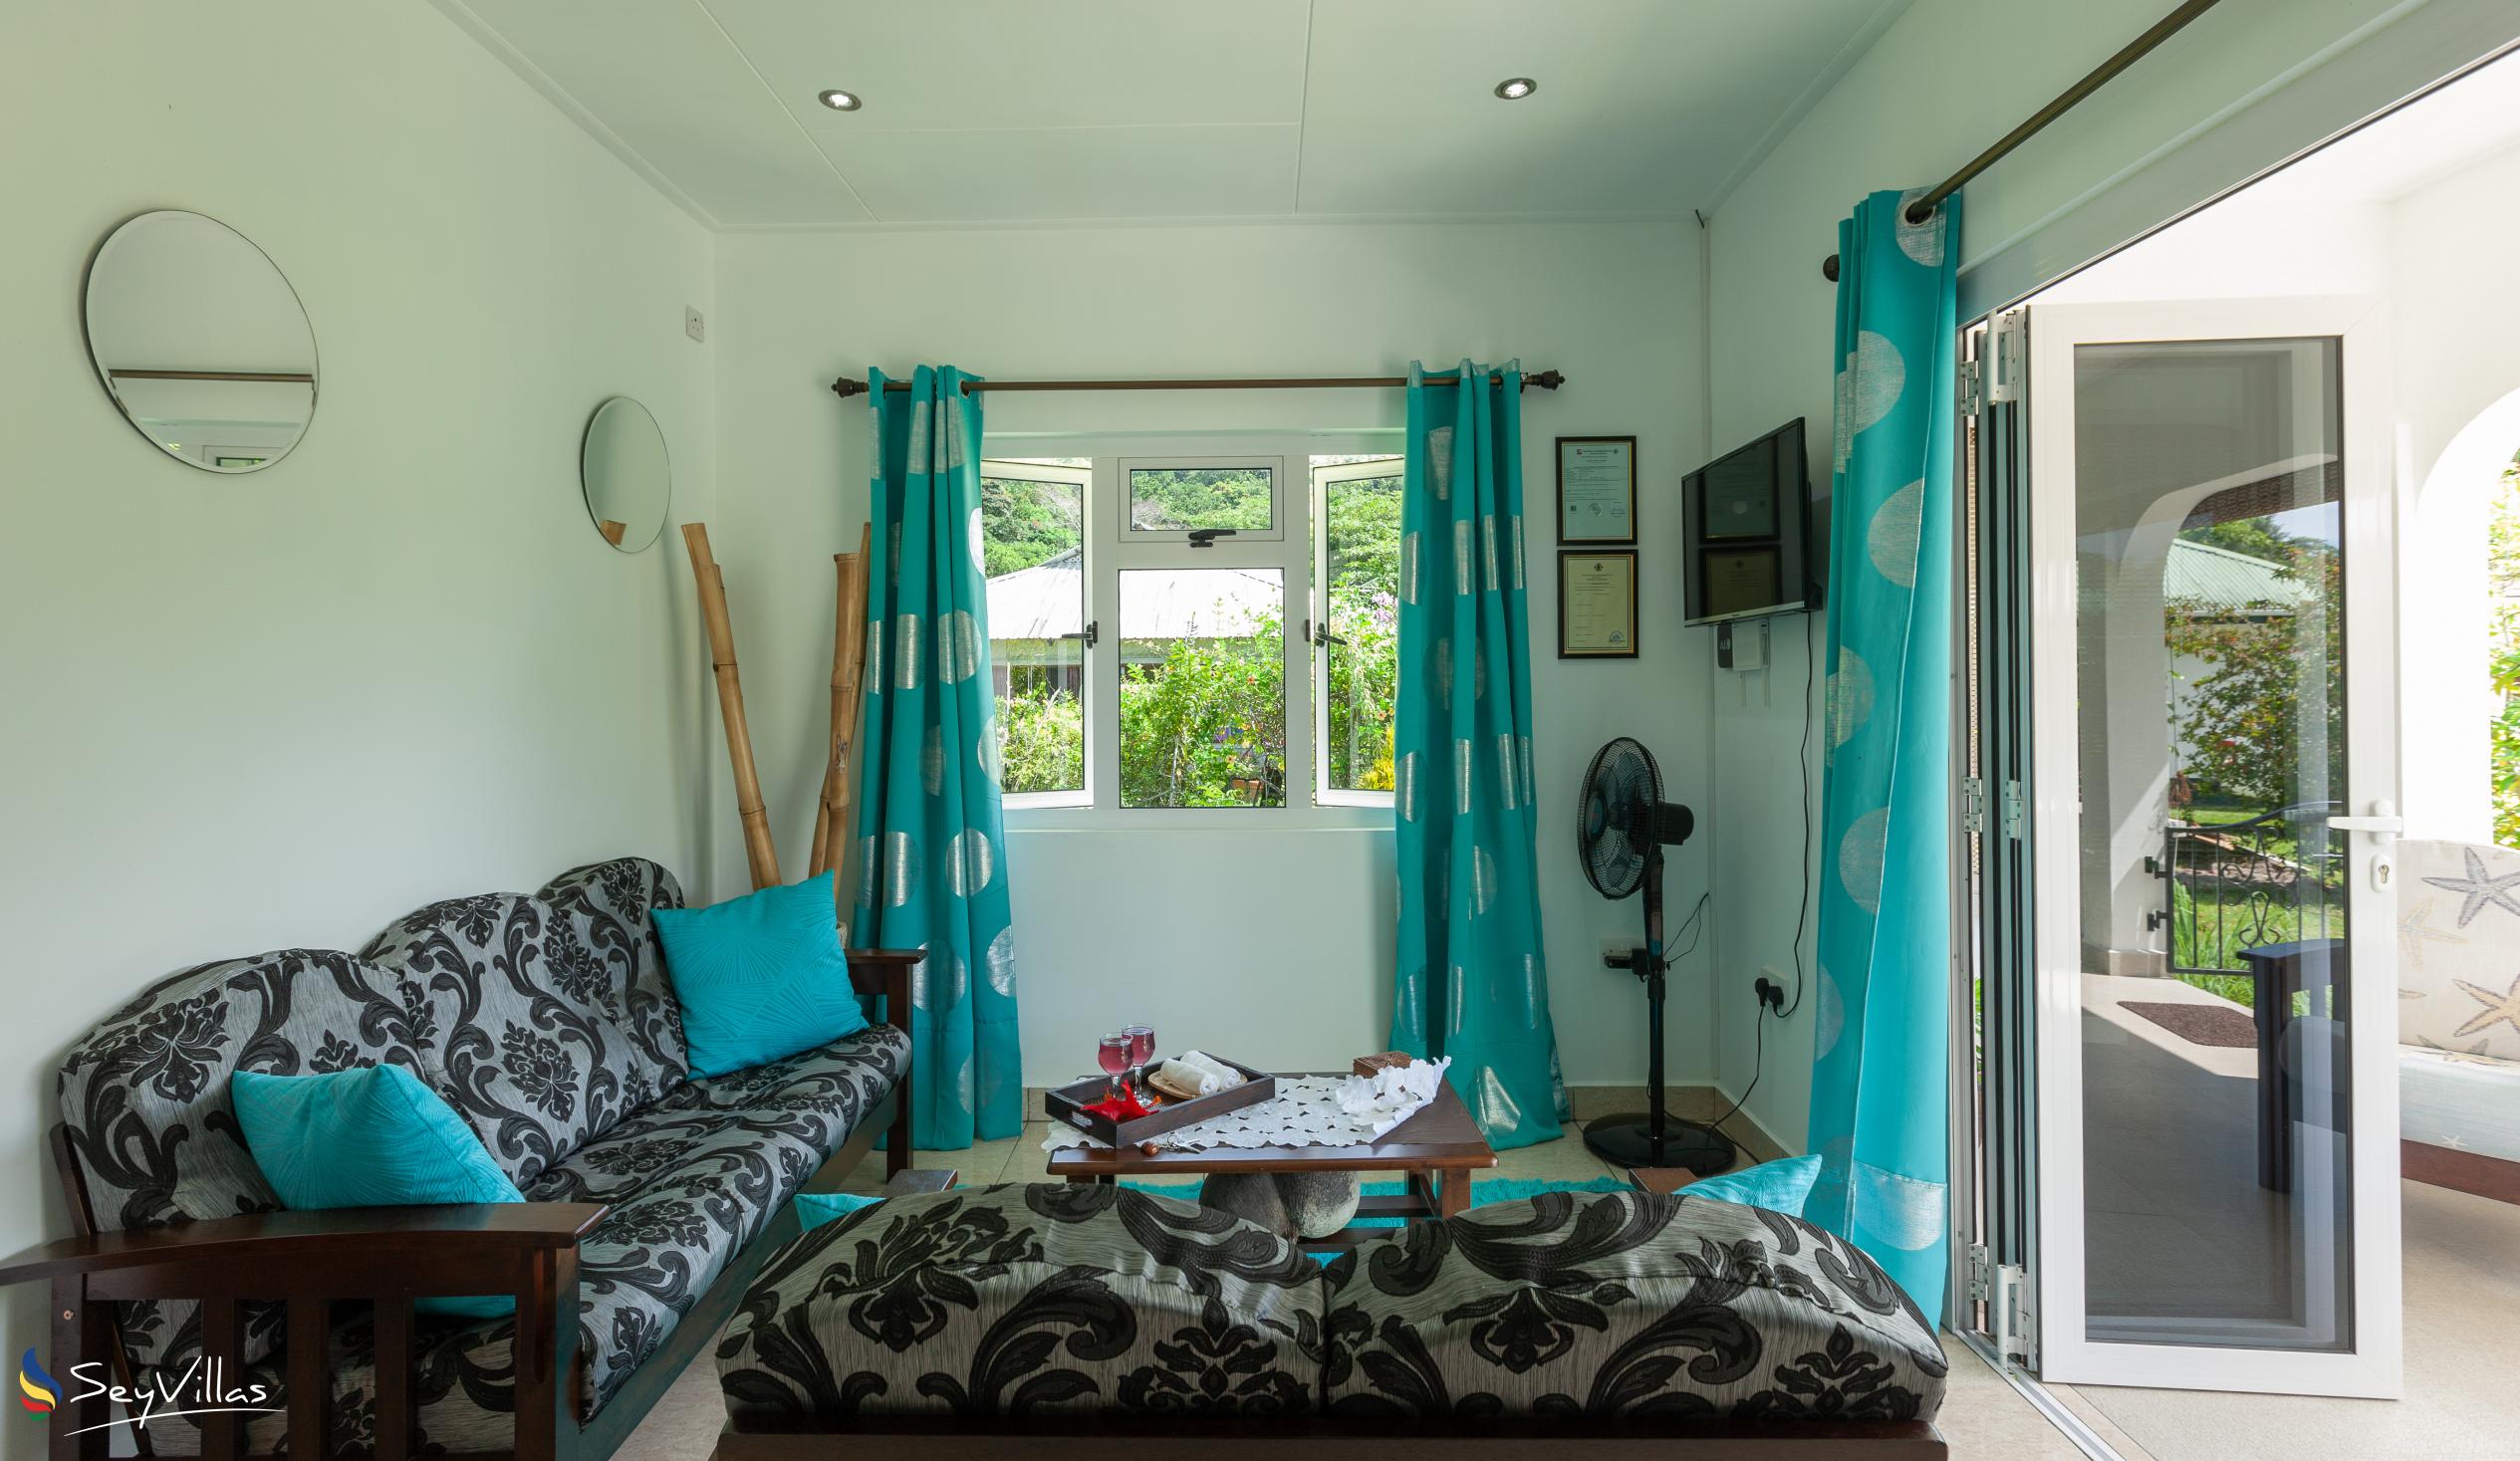 Foto 19: Destination Self-Catering - Villa con 1 camera - Praslin (Seychelles)